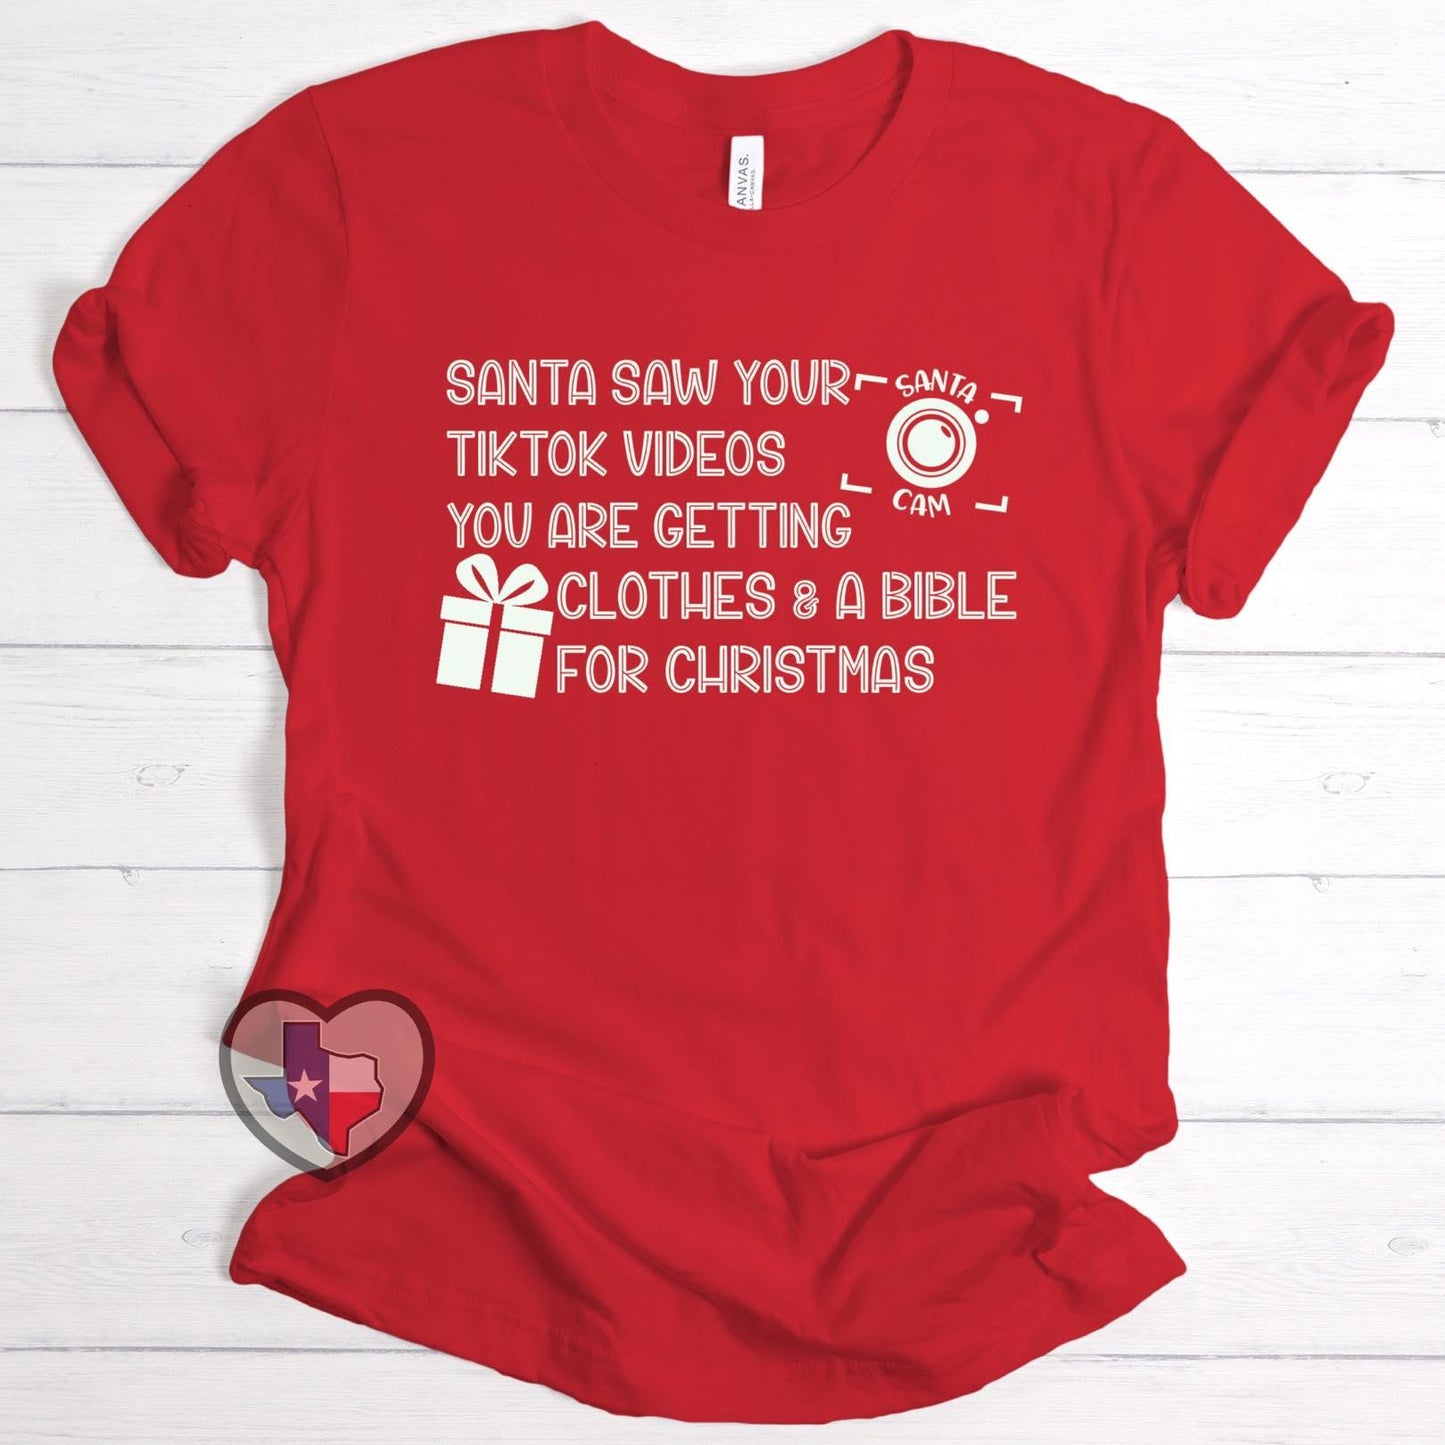 Santa Saw Your Tik Tok Videos *EXCLUSIVE* - Texas Transfers and Designs